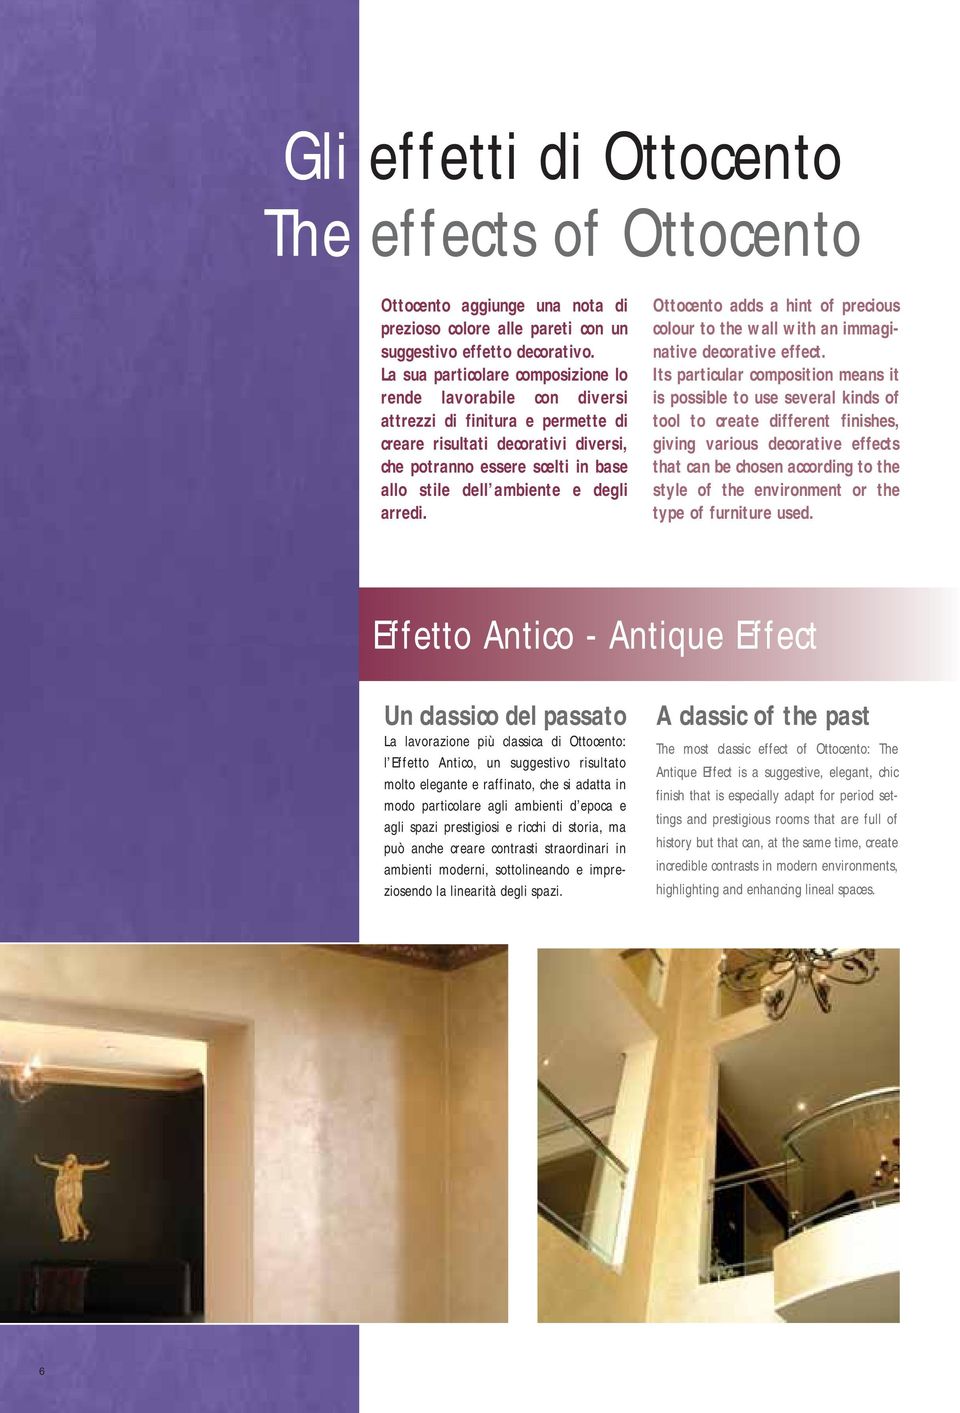 degli arredi. Ottocento adds a hint of precious colour to the wall with an immaginative decorative effect.